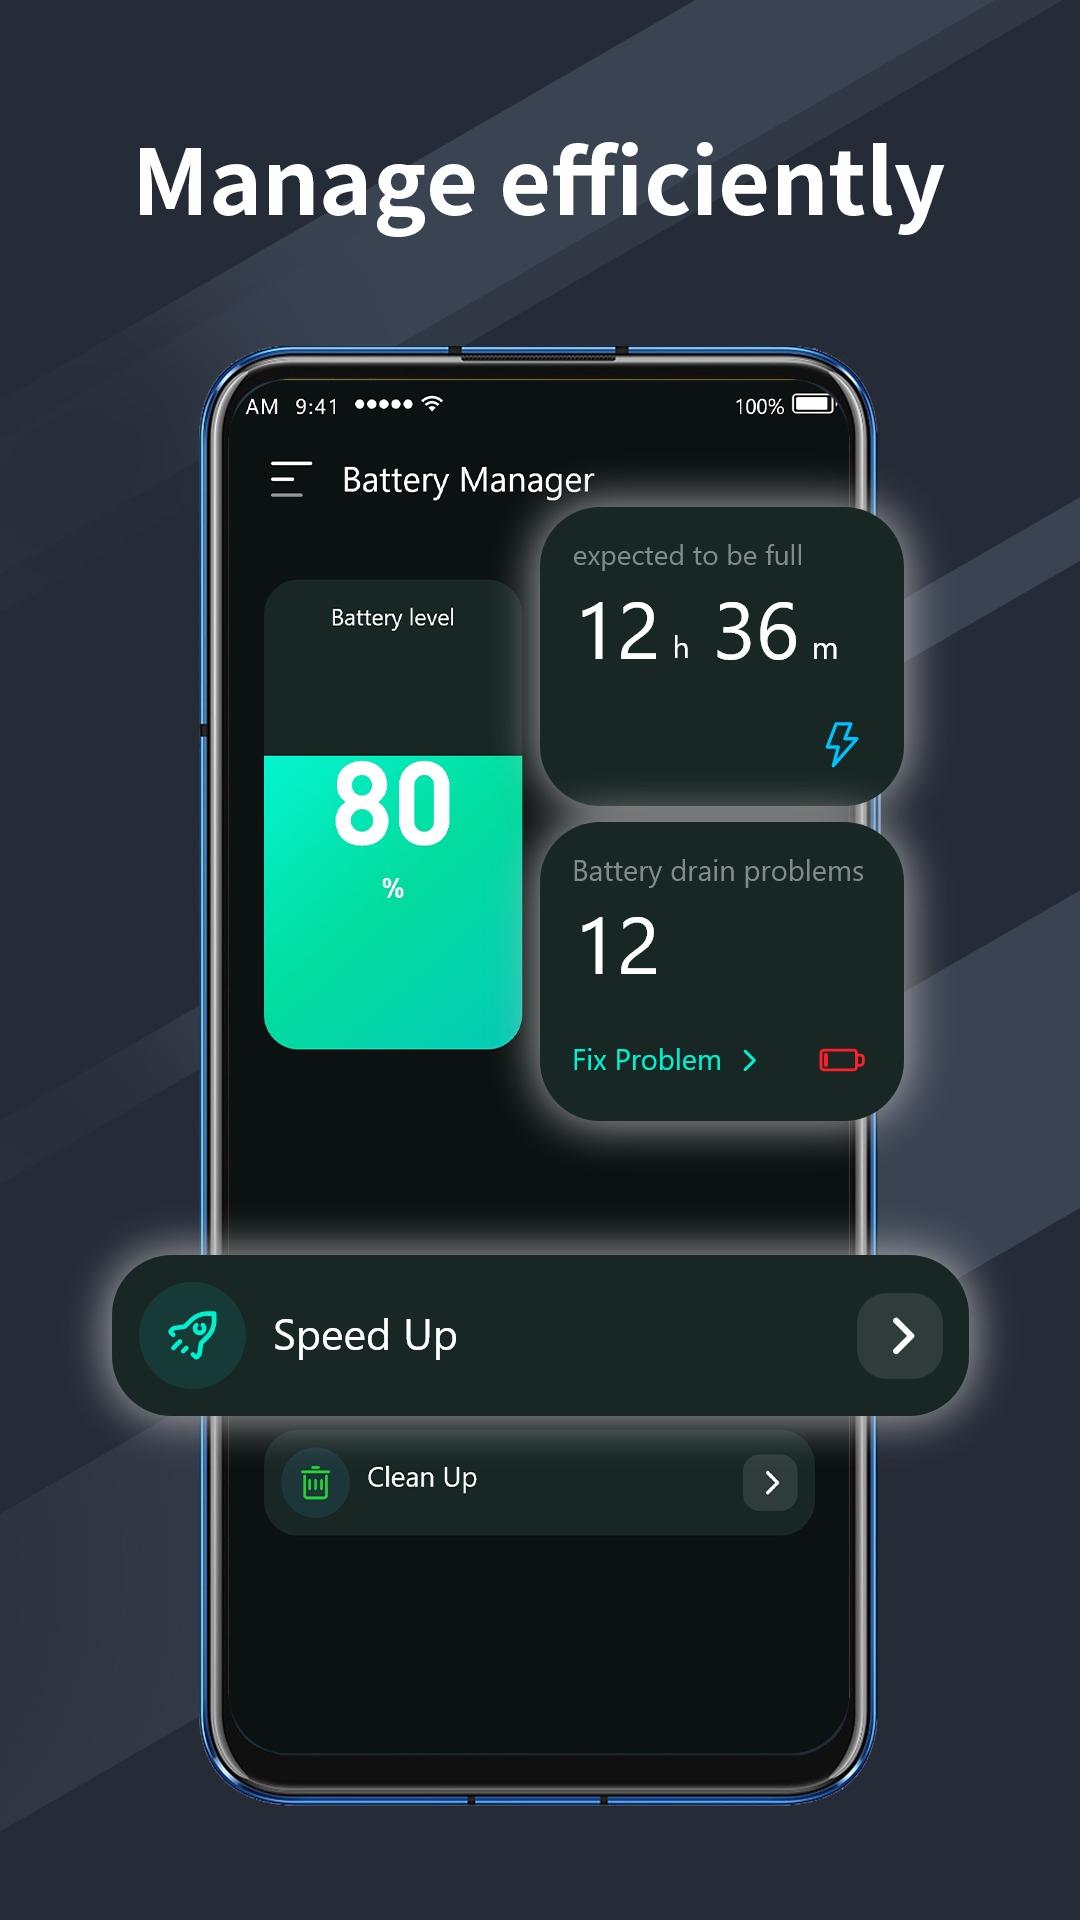 Battery manager. Android Battery. Батарея андроид 8к. Battery Management ESOP-8 sp4521 USB. Подключить использовать Battery Manager viviy 31.